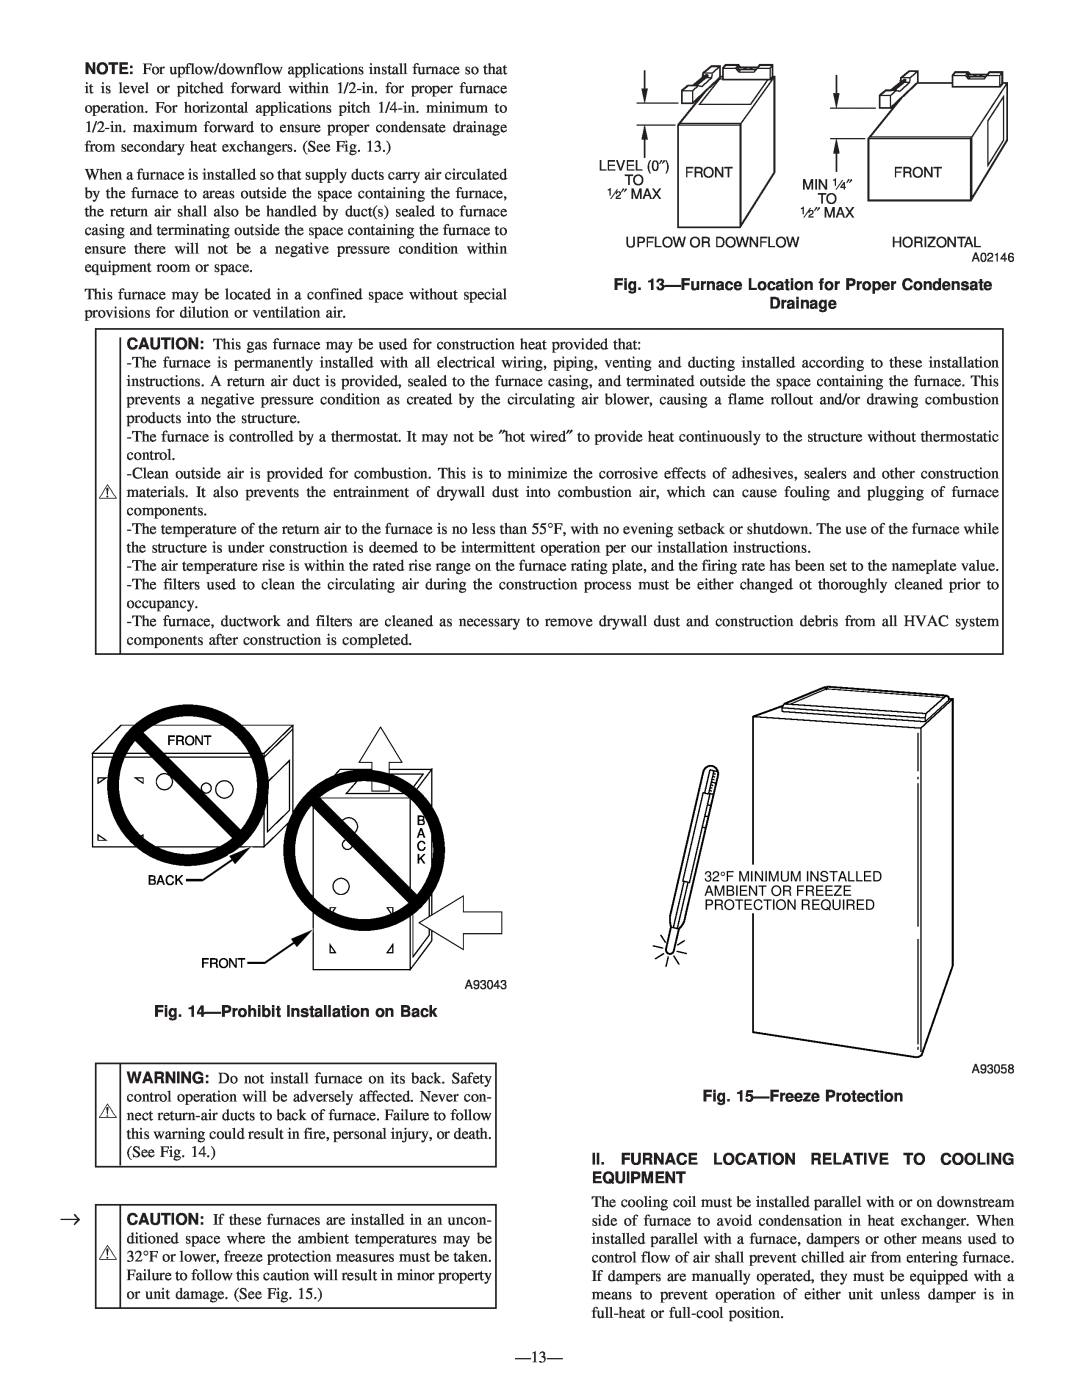 Bryant 340MAV FurnaceLocation for Proper Condensate, Drainage, ProhibitInstallation on Back, FreezeProtection 